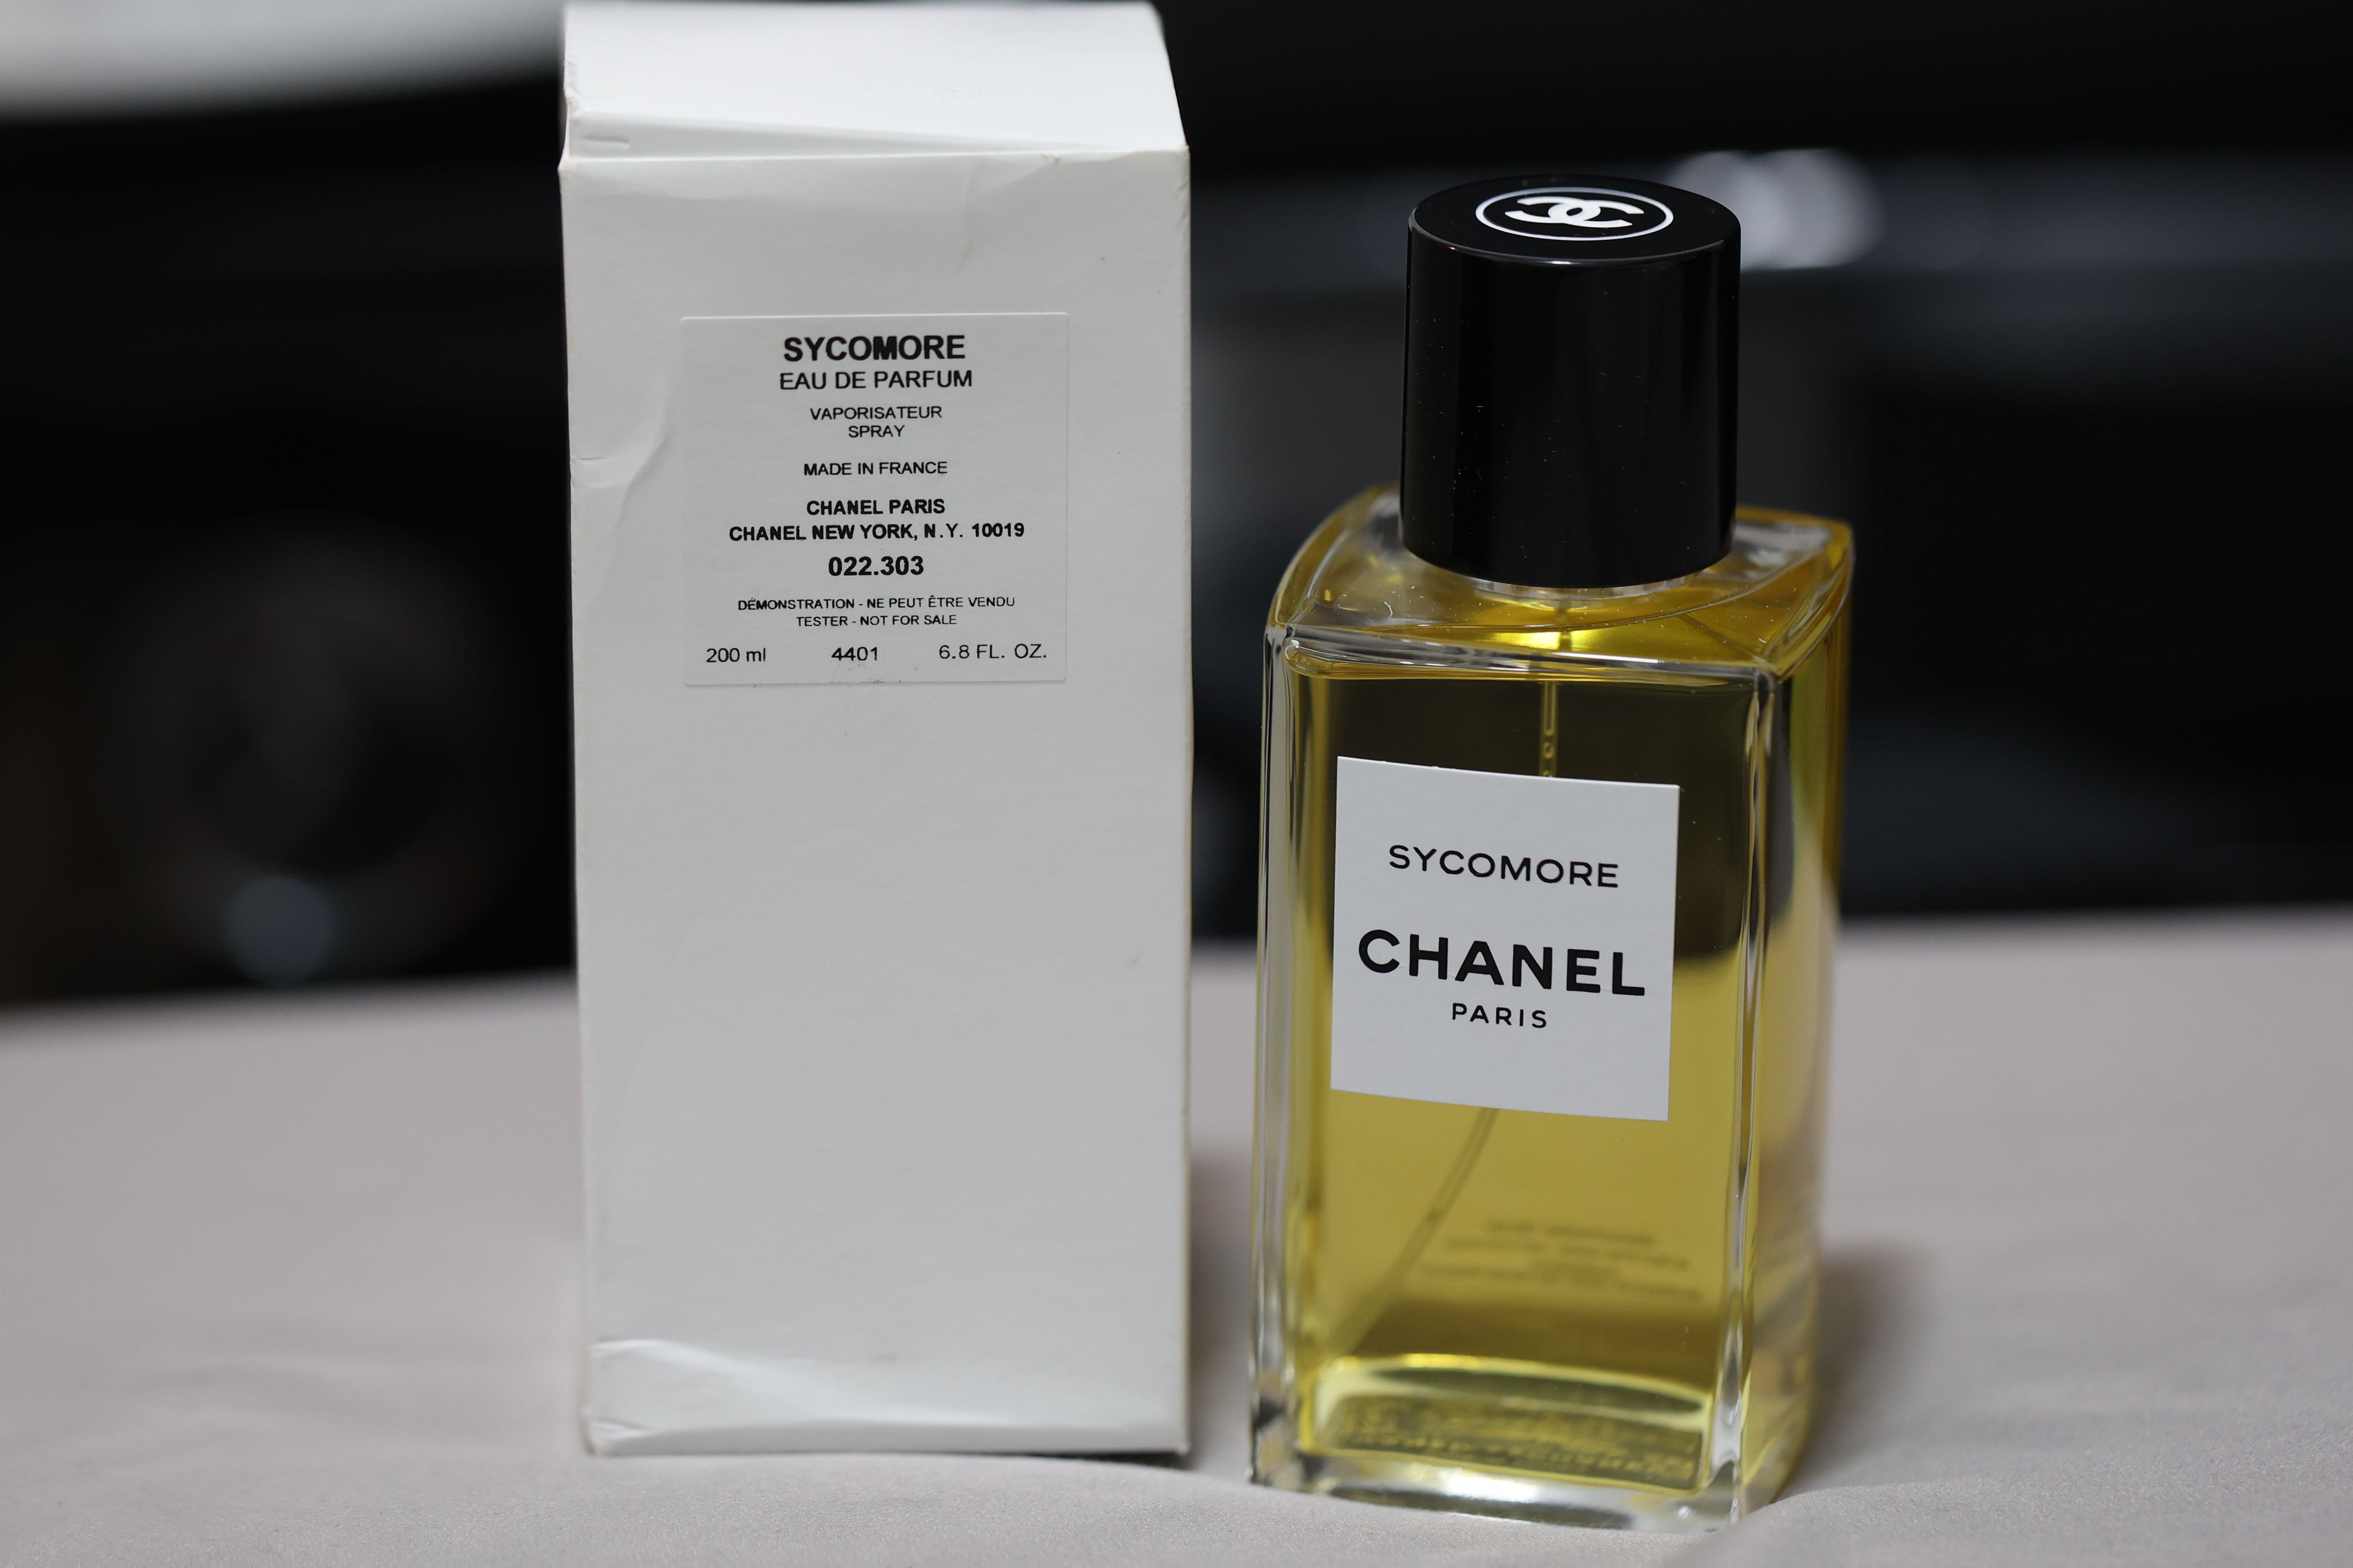 Chanel Les Exclusifs de Chanel №18 - Perfume (sample)